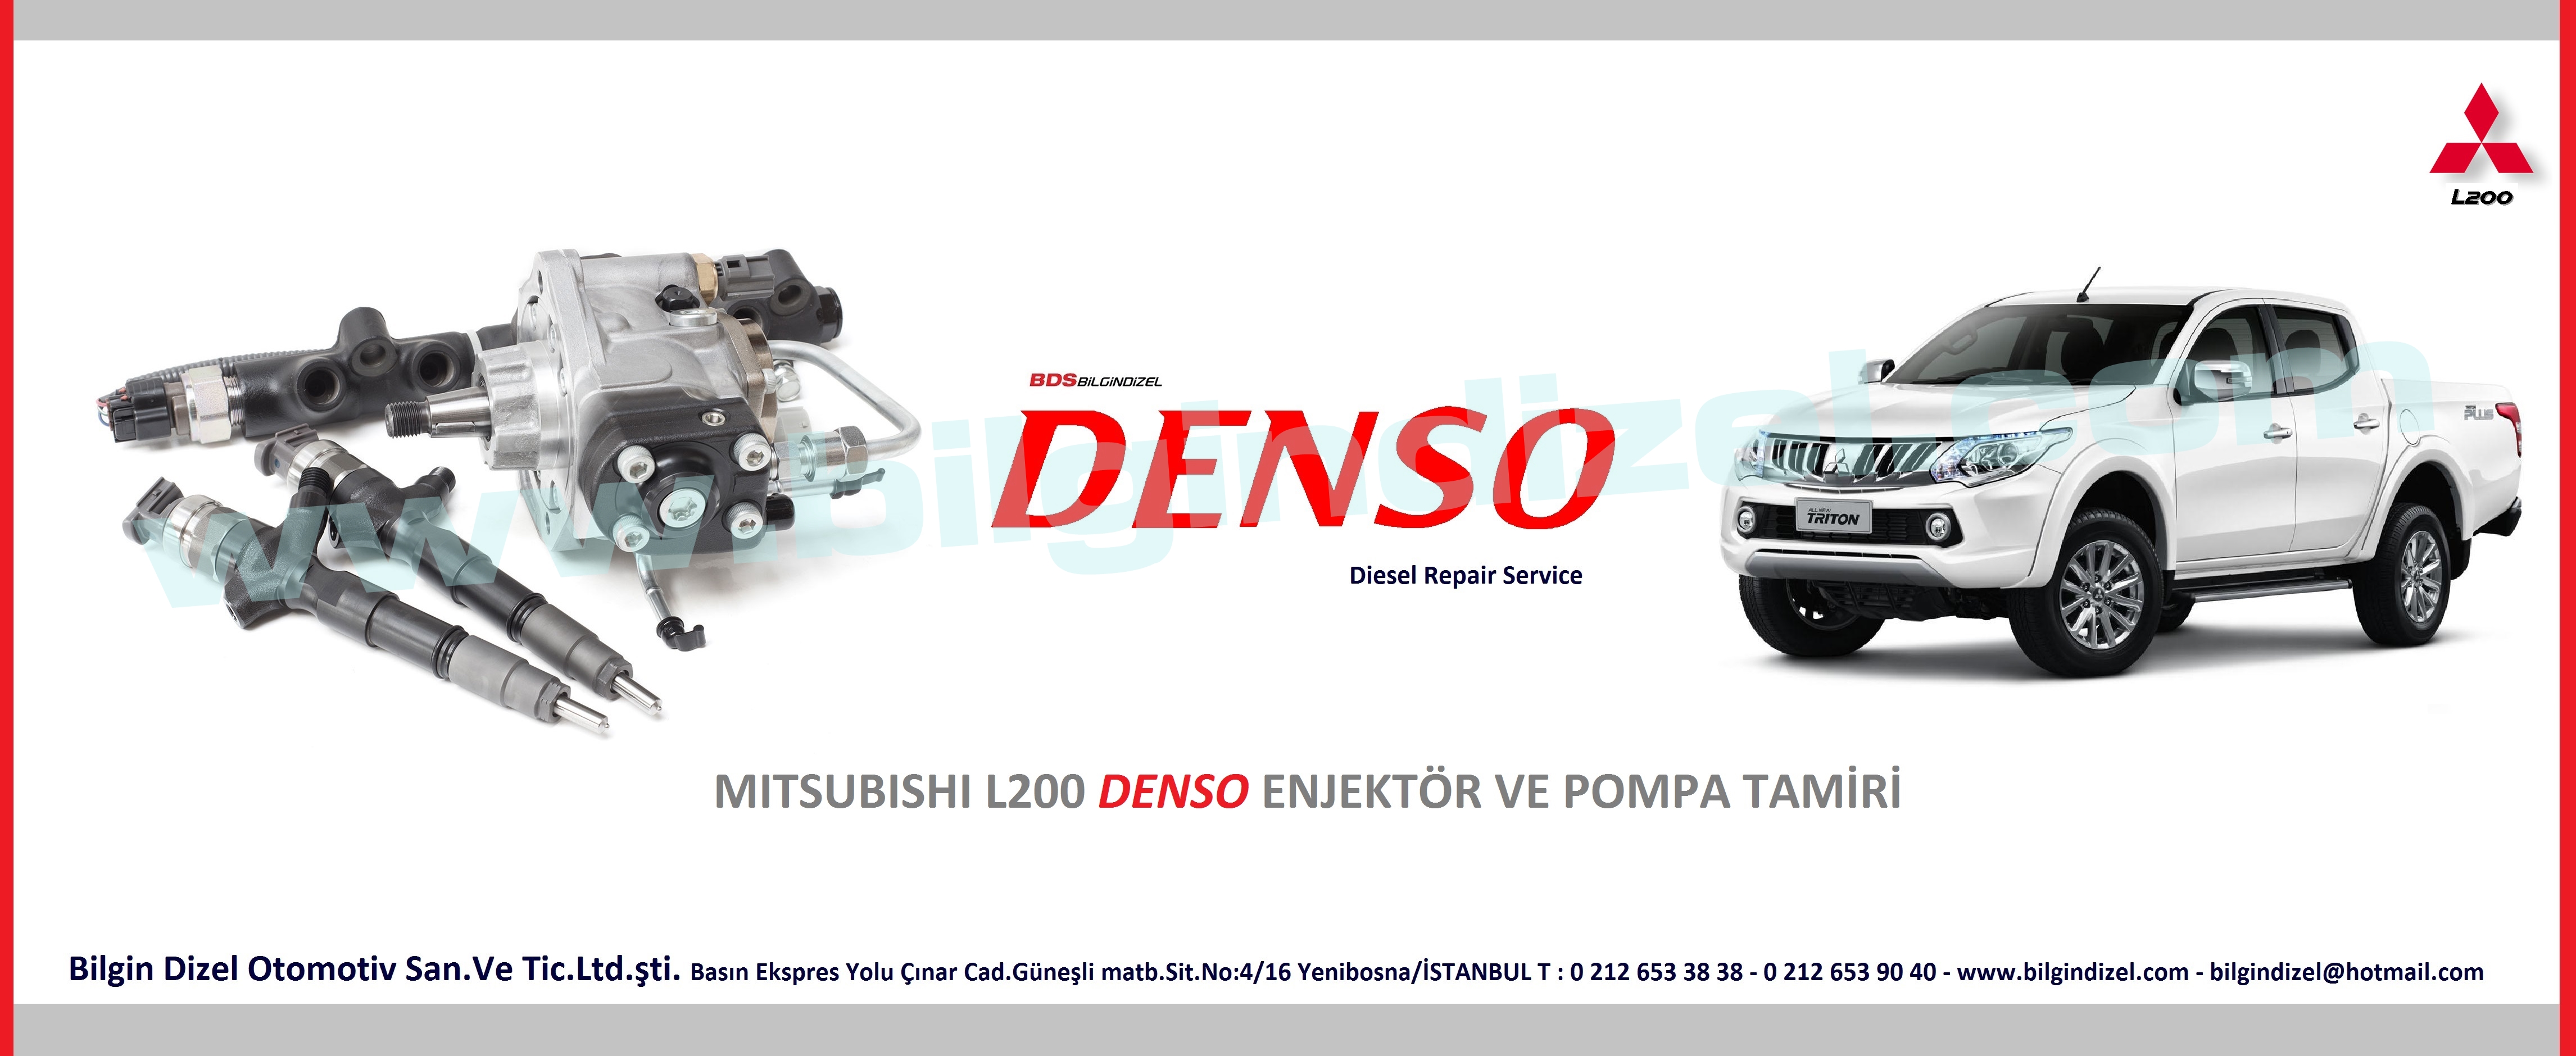 Mitsubishi L200 Denso Enjektör Tamiri Bilgin Dizel'de Başlamıştır 